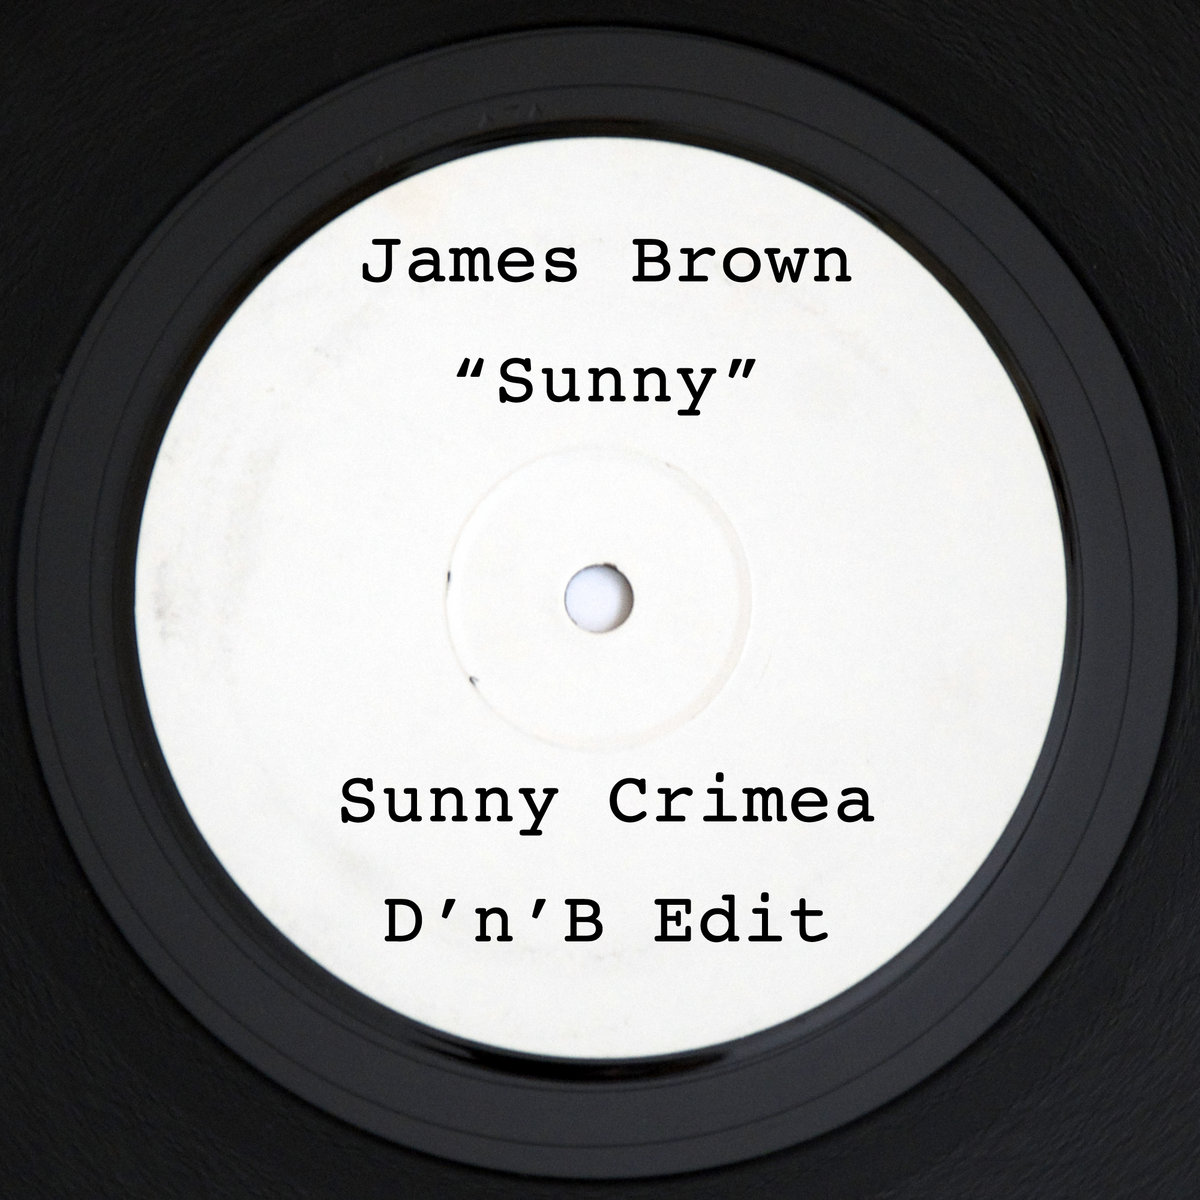 James Brown - Sunny (Sunny Crimea DnB Edit) | Free Download